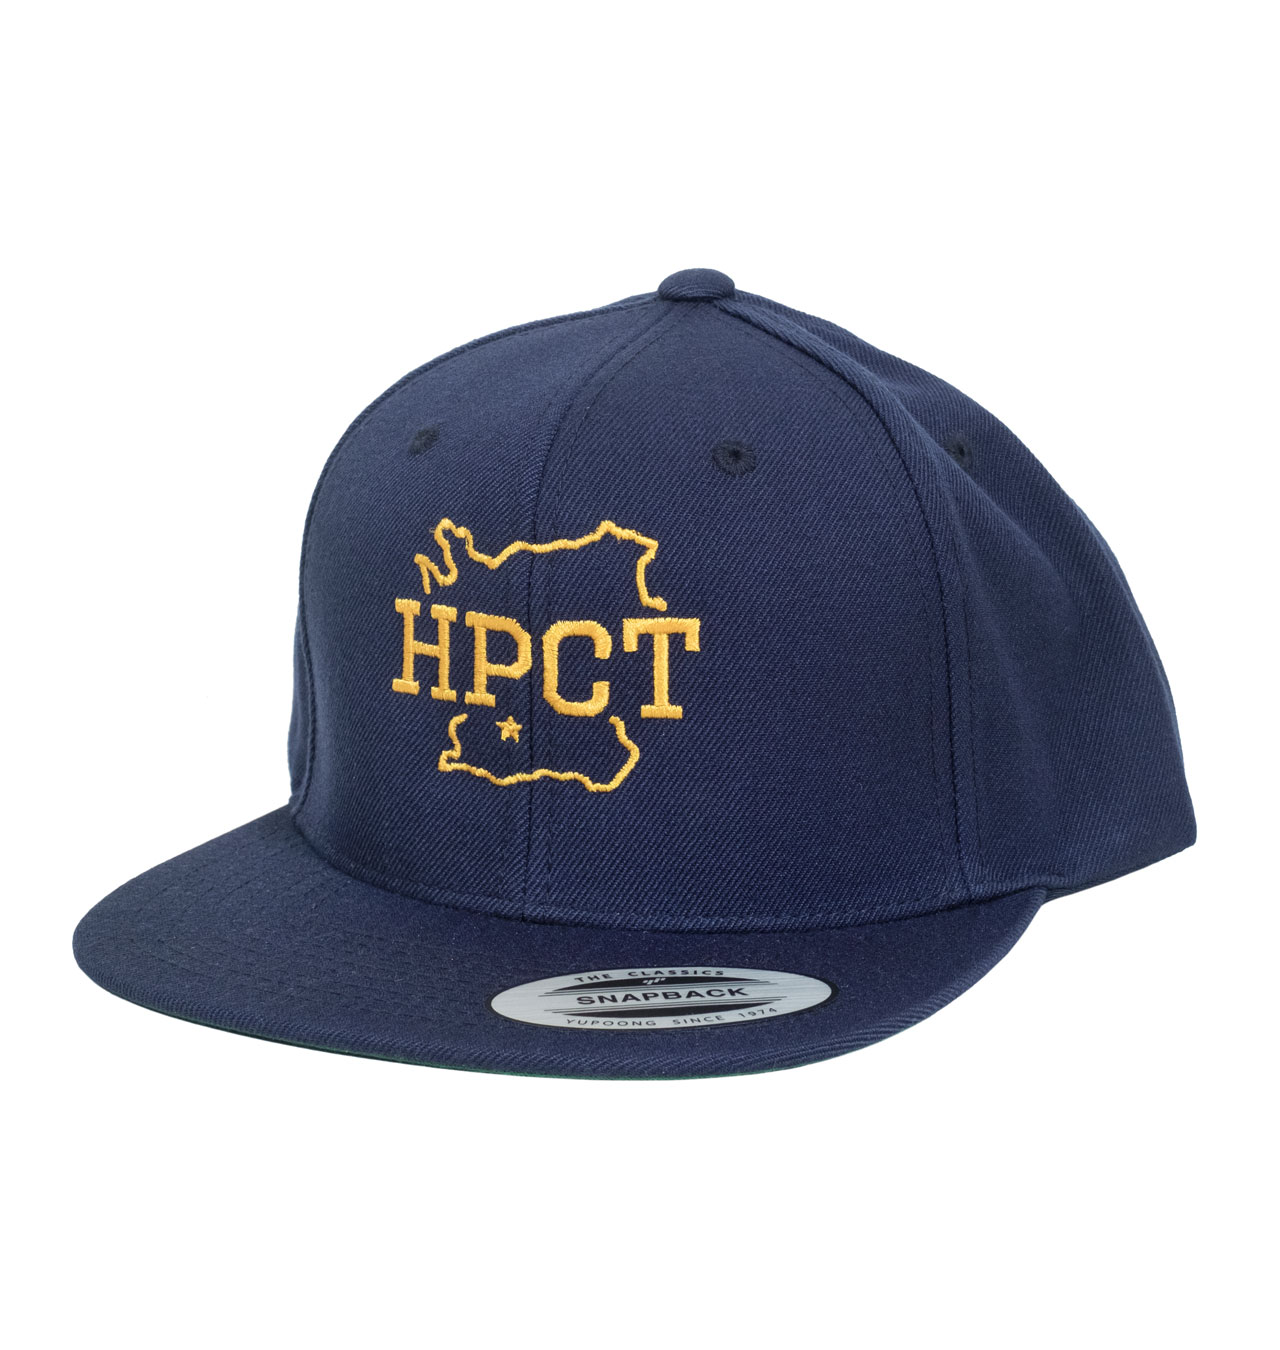 hepcat-store-hpct-cap-01